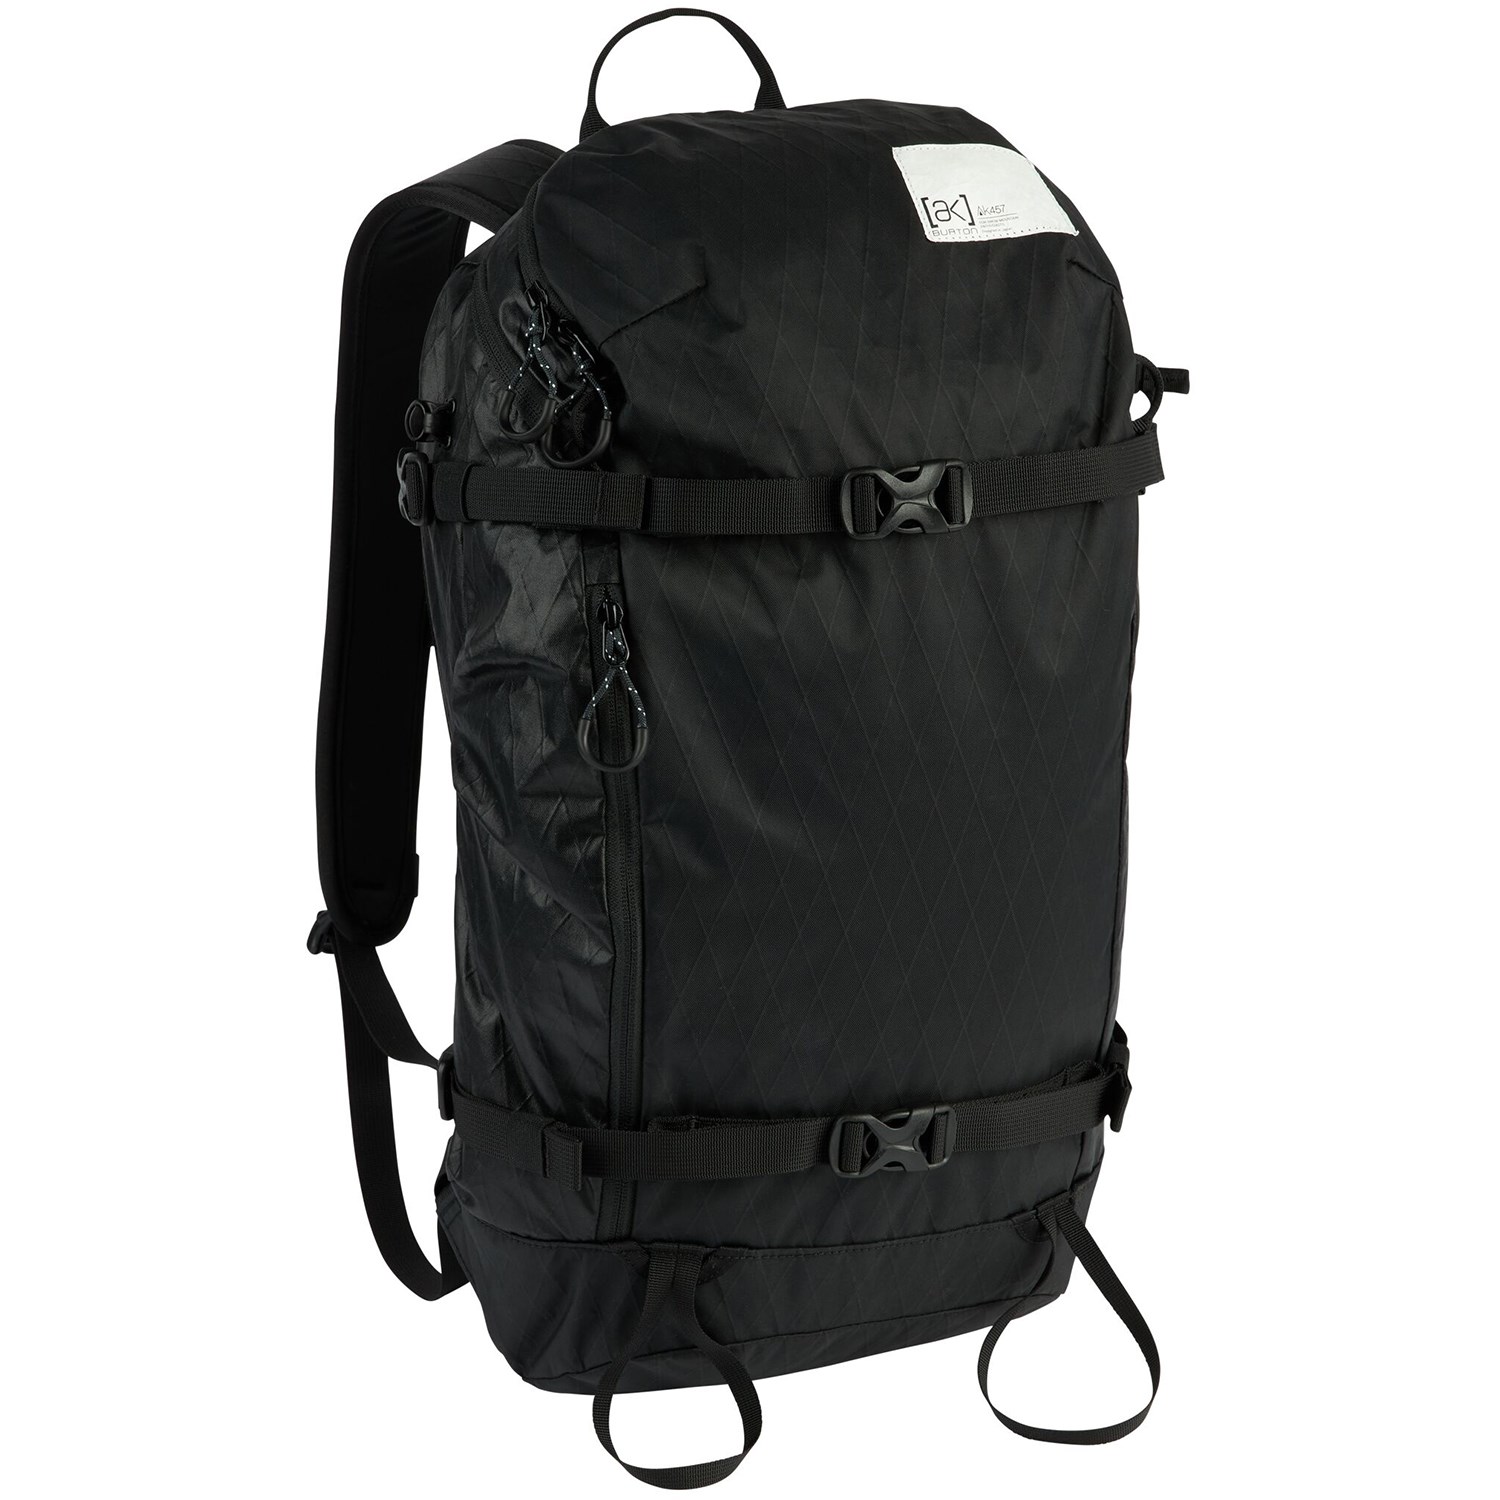 BackpackBURTON [ak] JAPAN GUIDE 35L BACKPACK